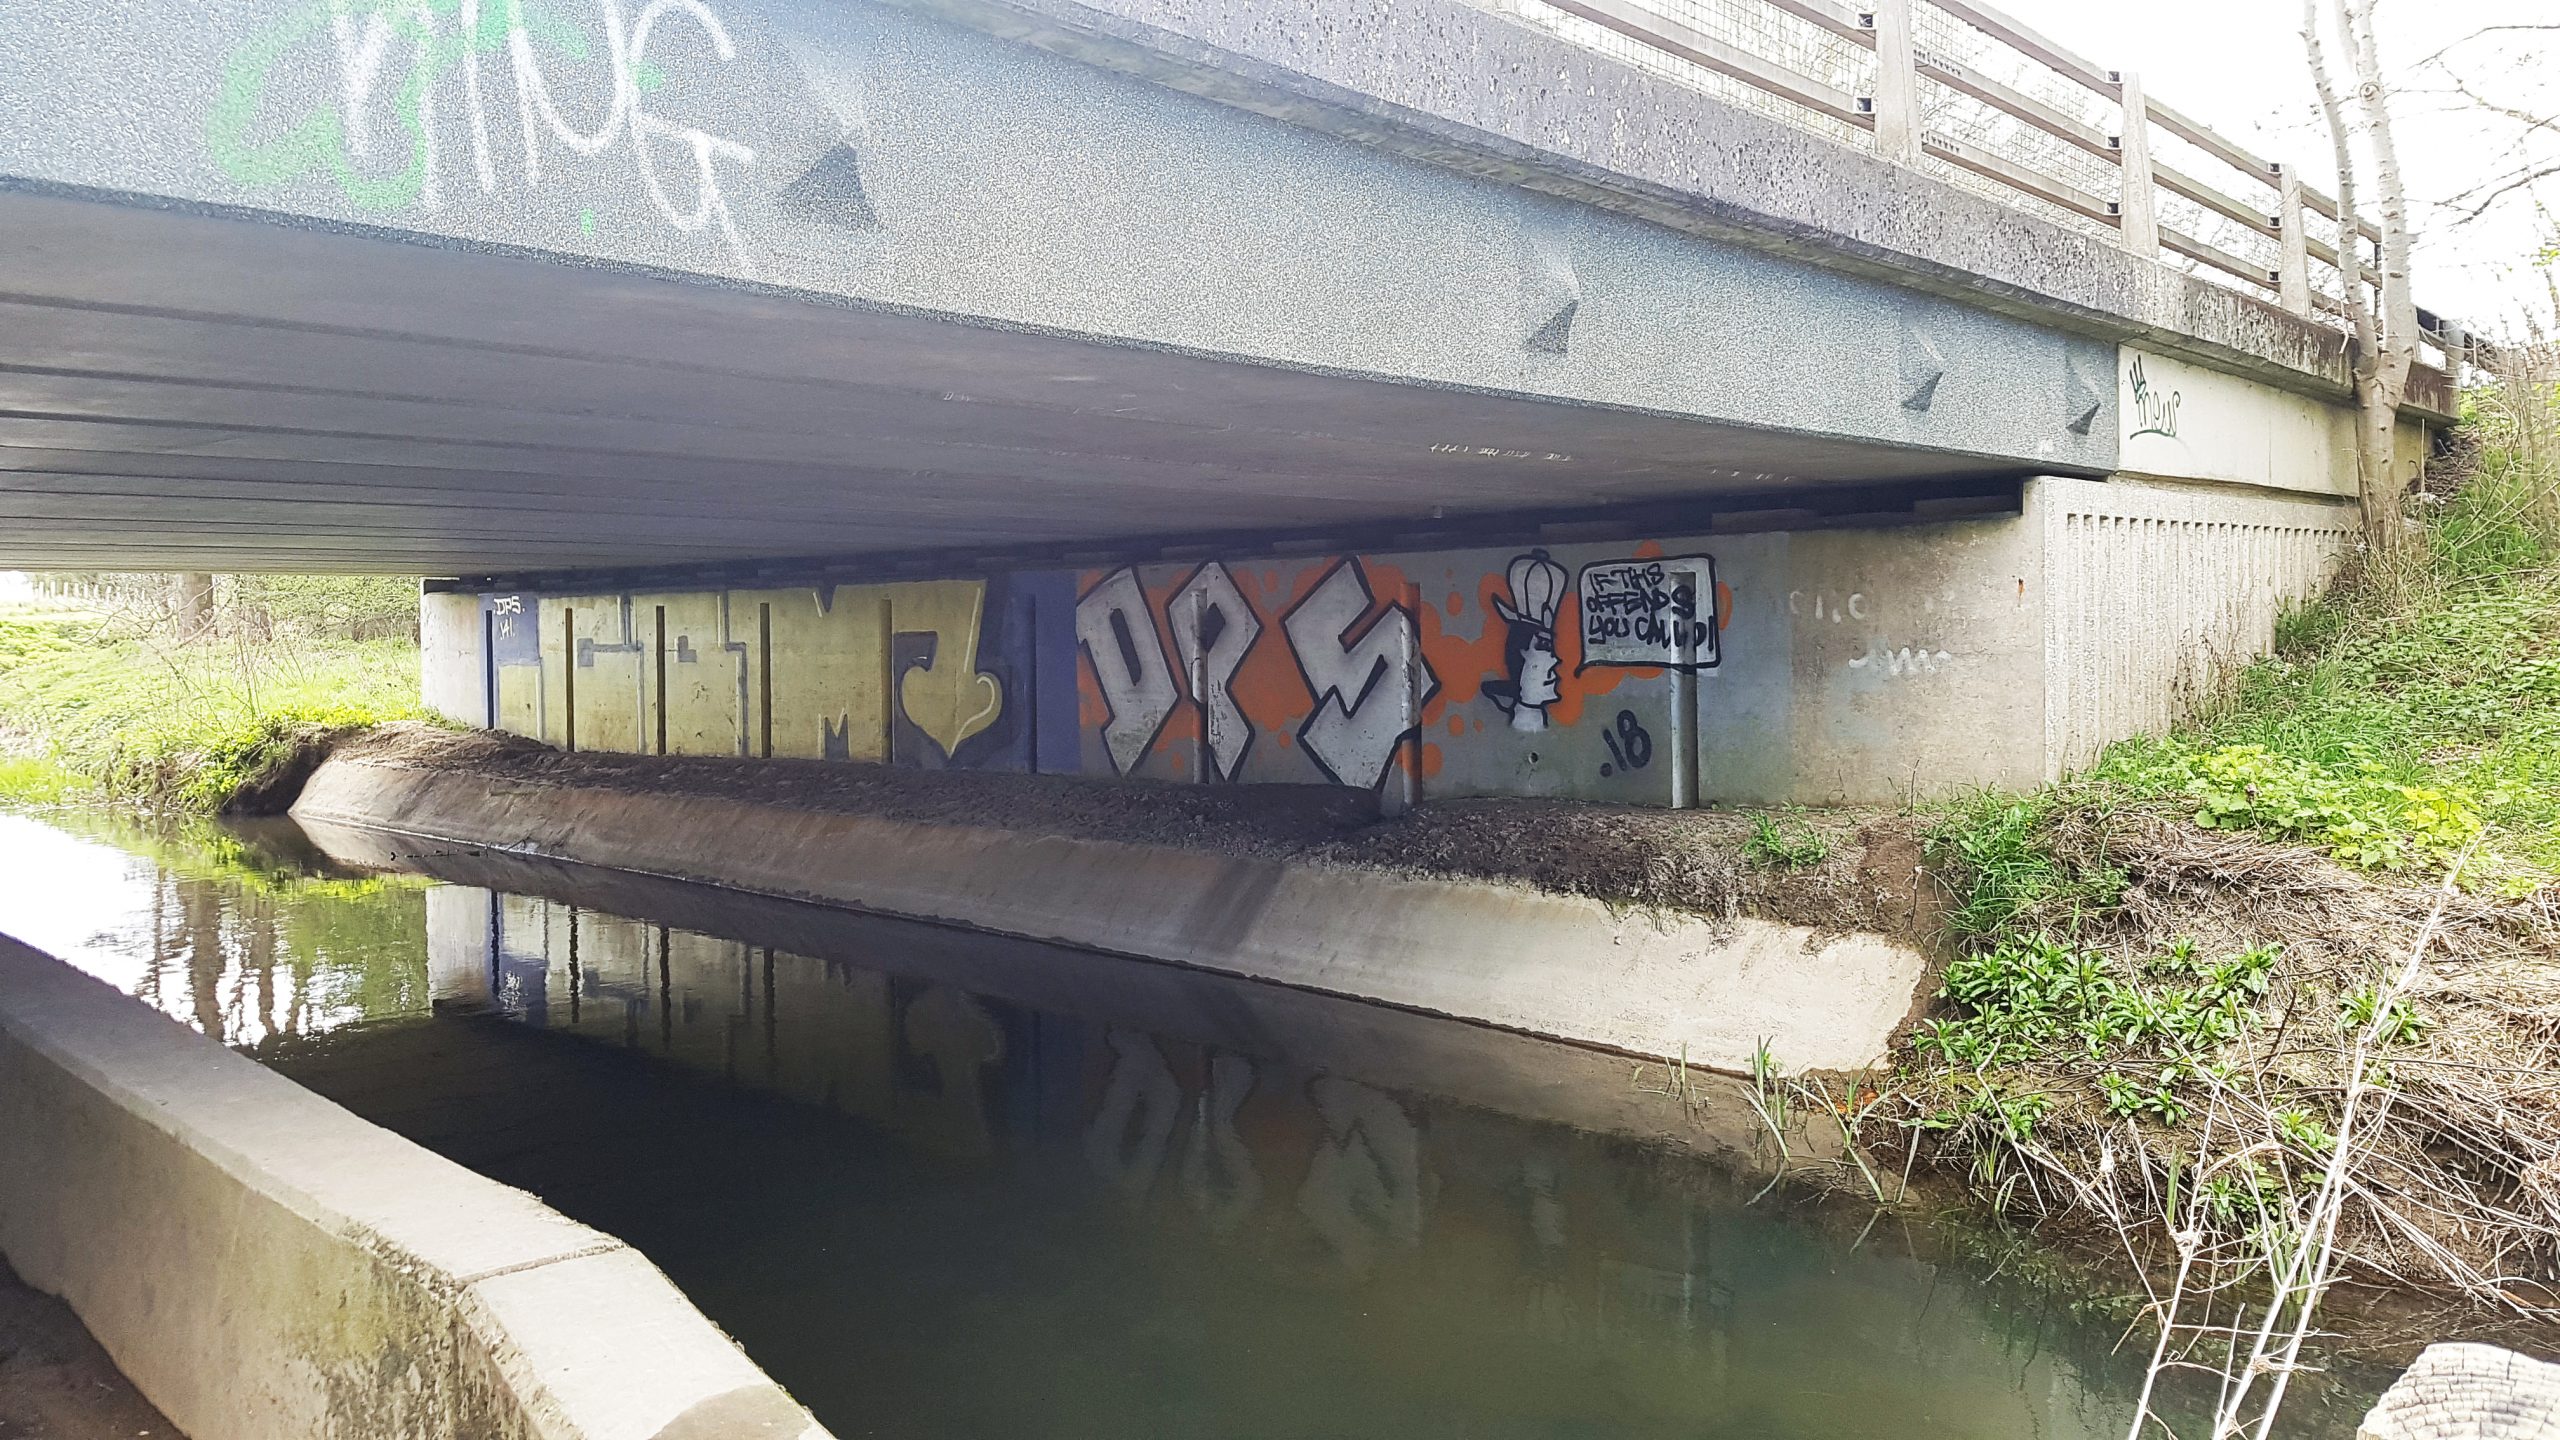 Under bridge graffiti overview